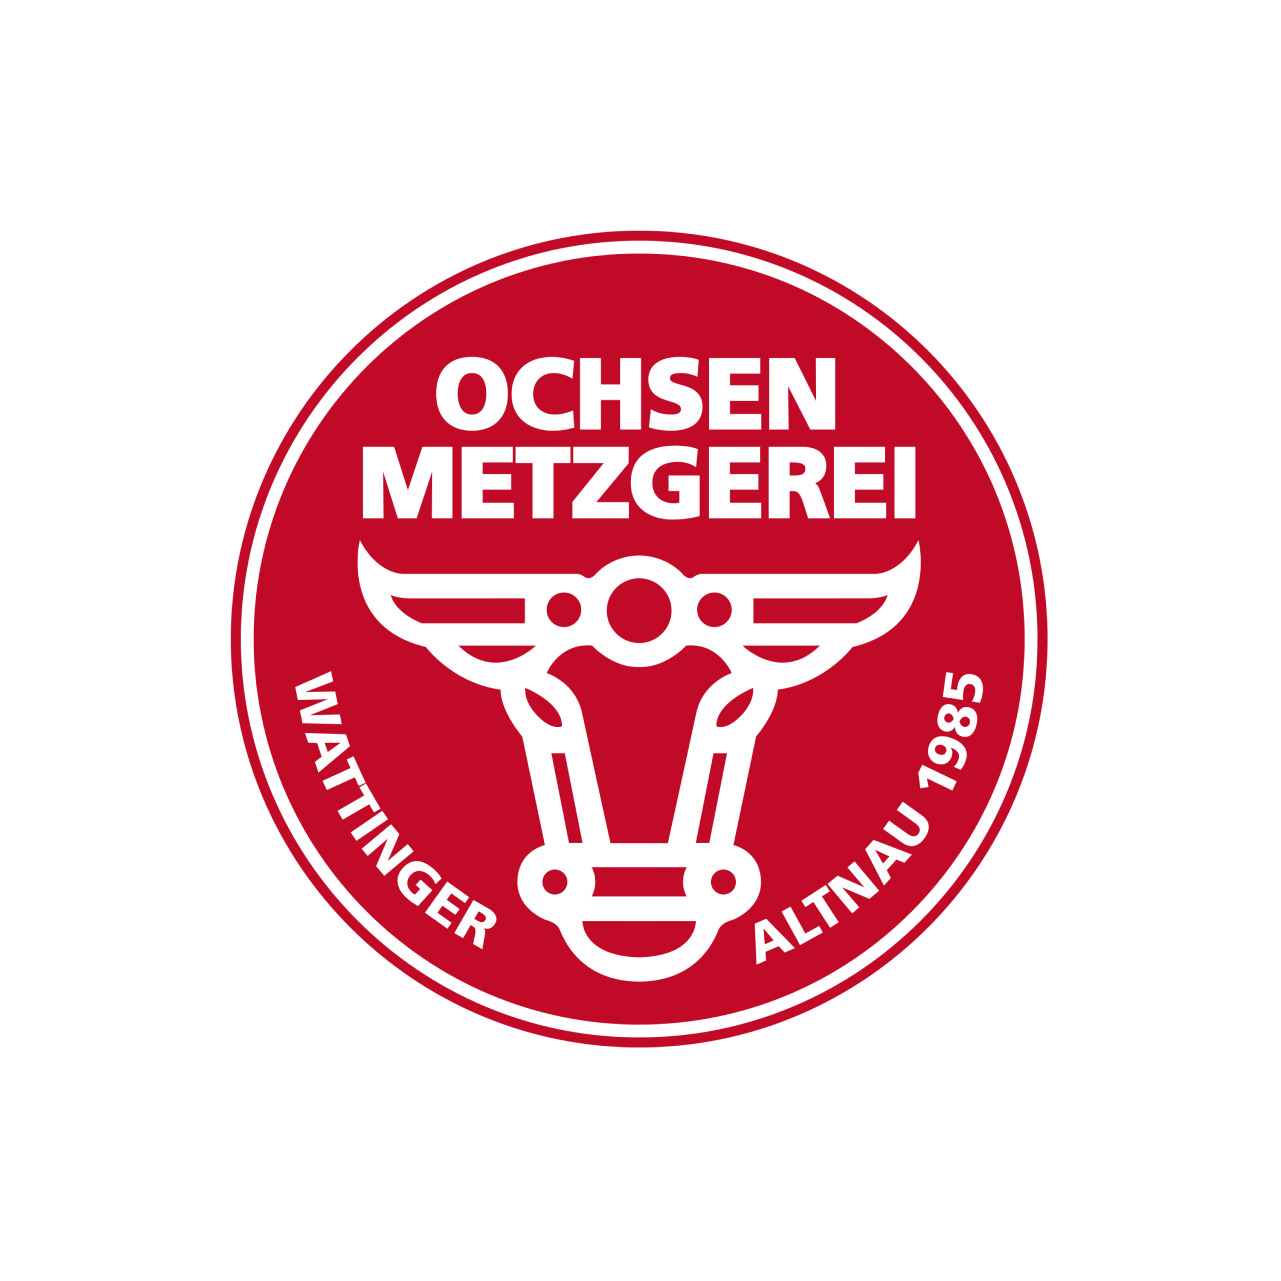 Ochsen Metzgerei Logo